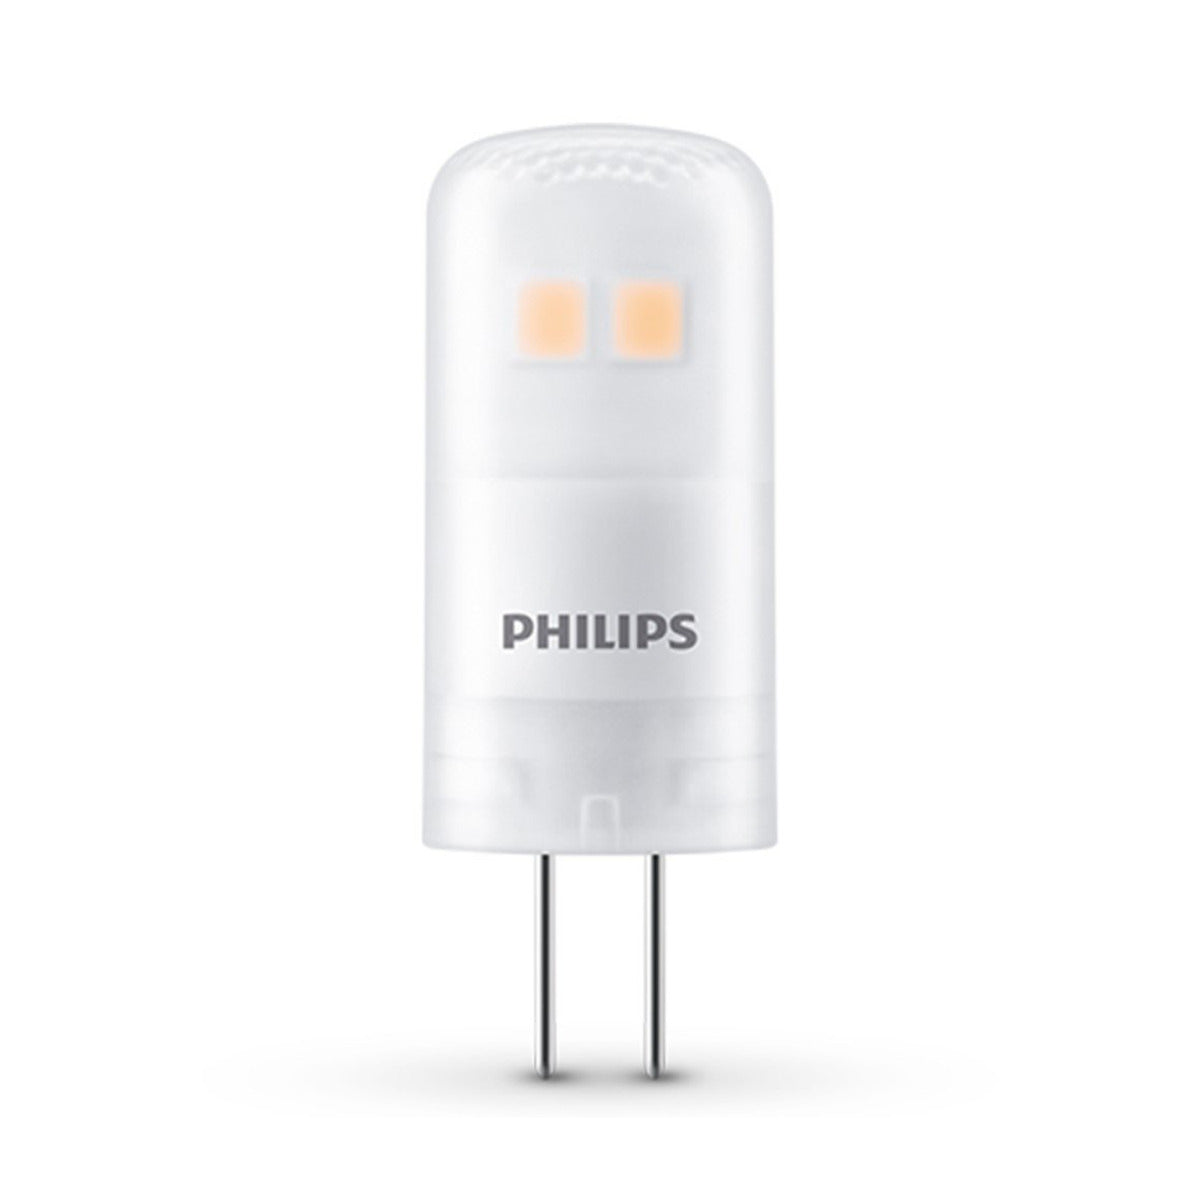 Philips LED Leuchtmittel 1W (10W) G4 warmweiß 2700K [Energieklasse F]